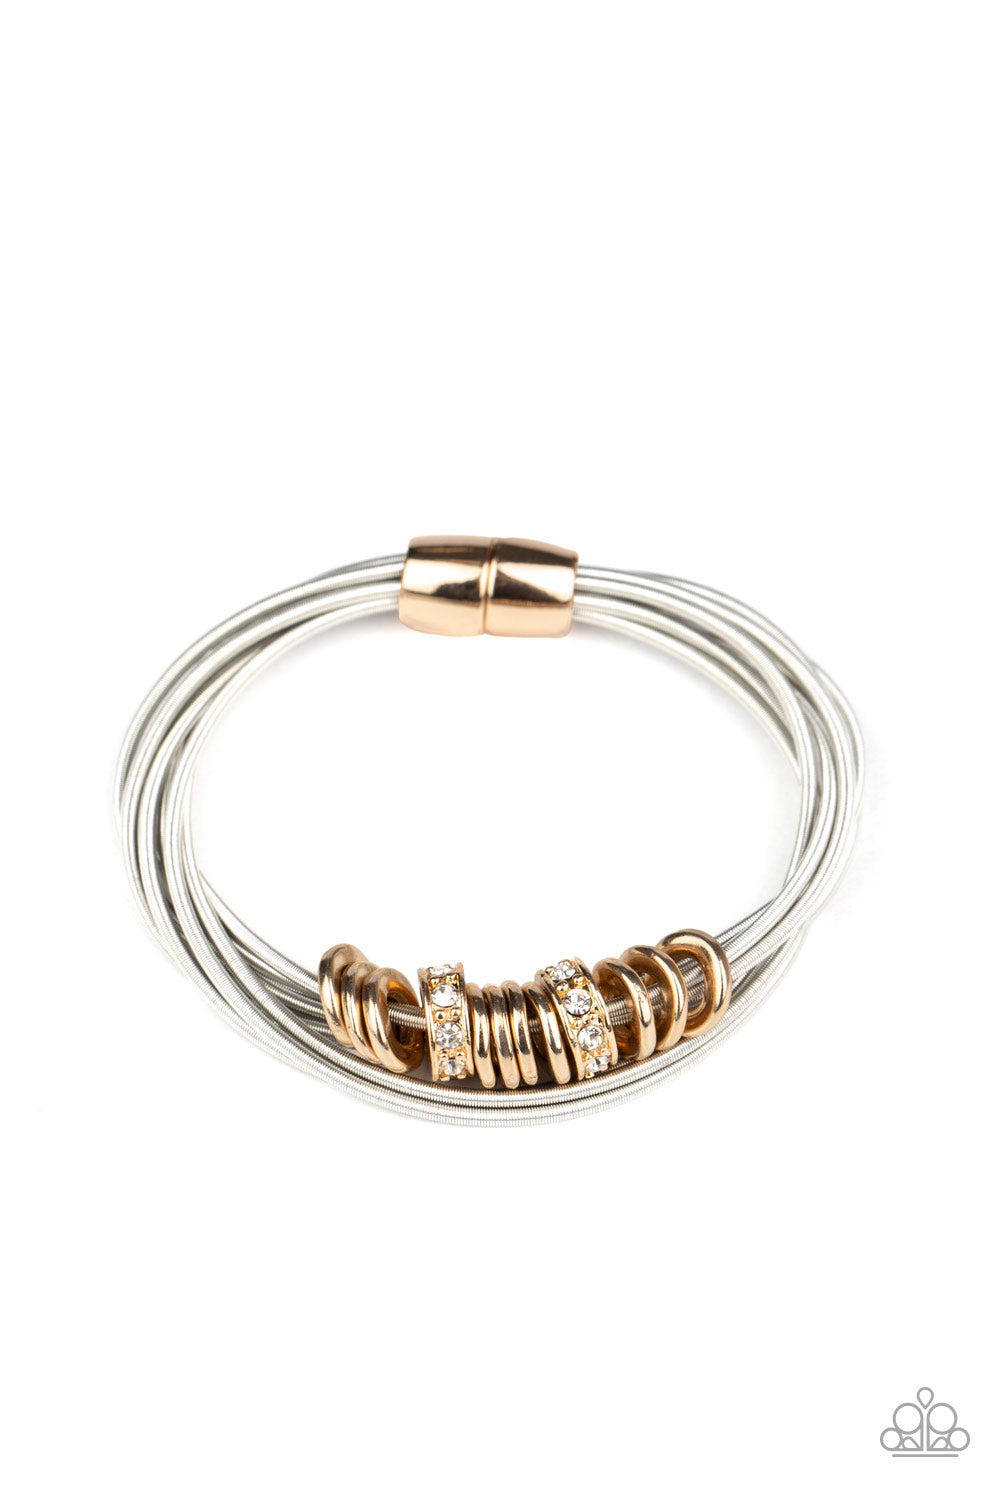 Magnestically Metro - gold - Paparazzi bracelet